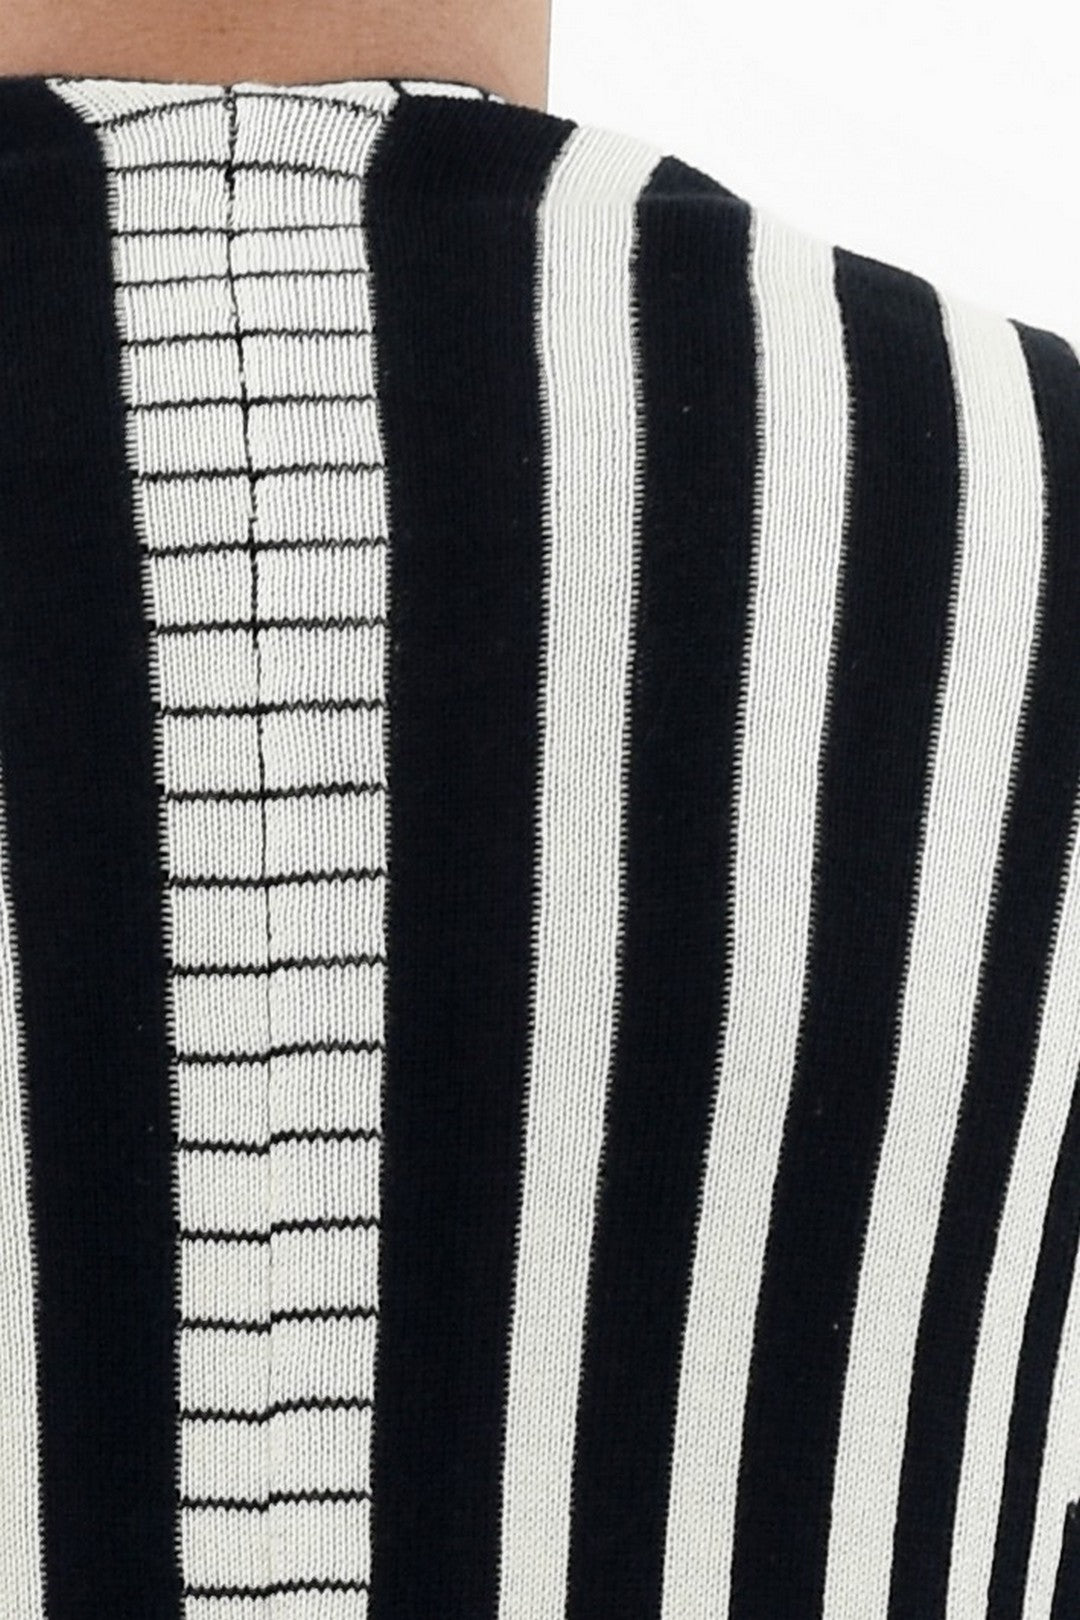 Menswear Black and Off-White Knitwear Zebra Poncho ZG5238